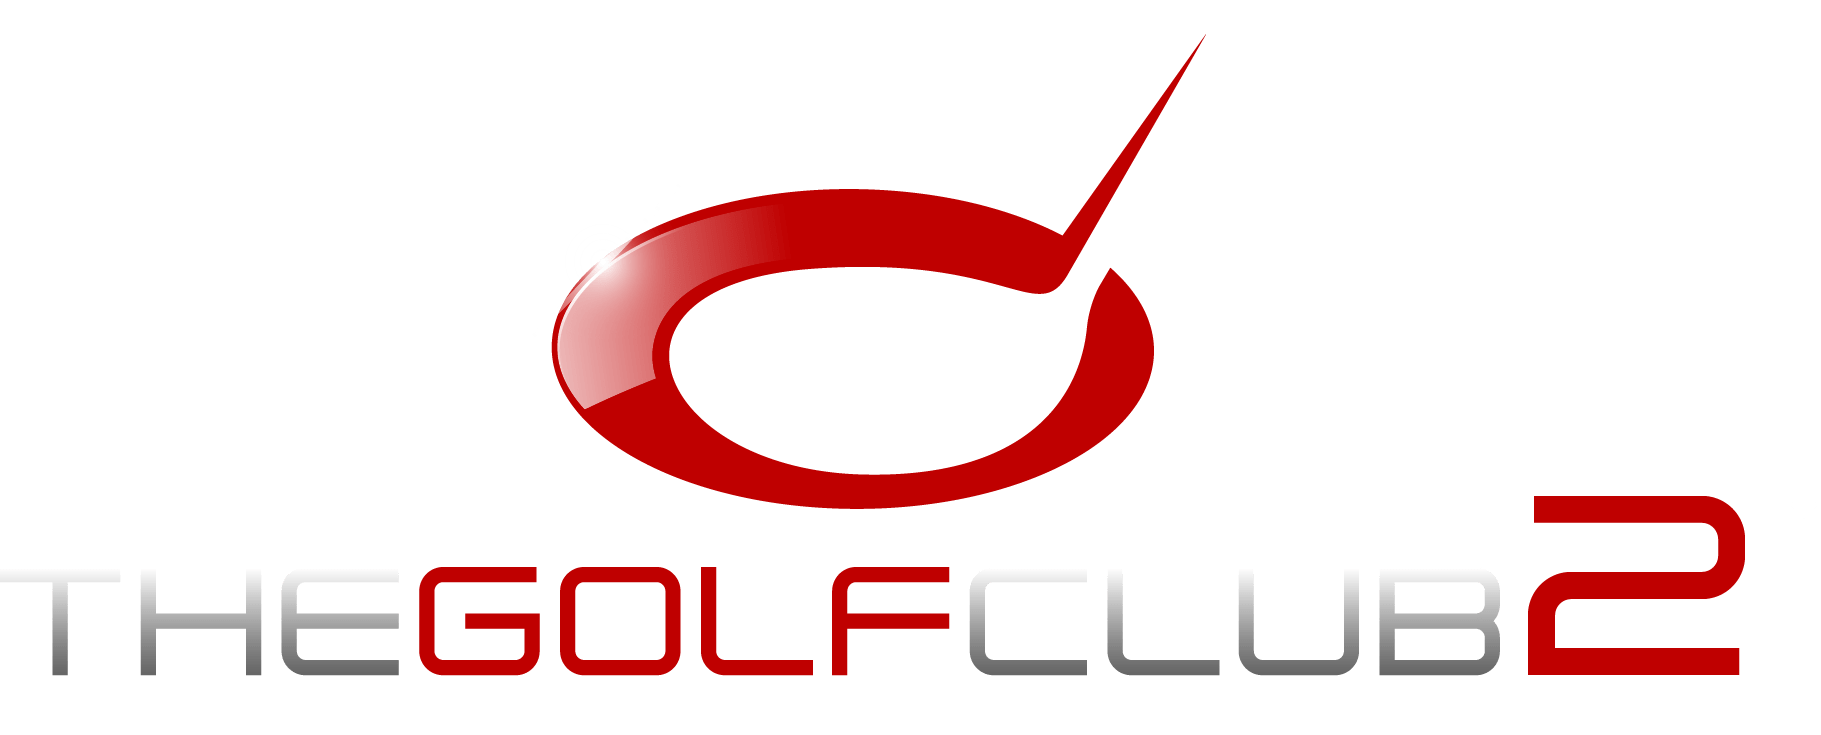 The Golf Club 2 – Birdie or Bogey?